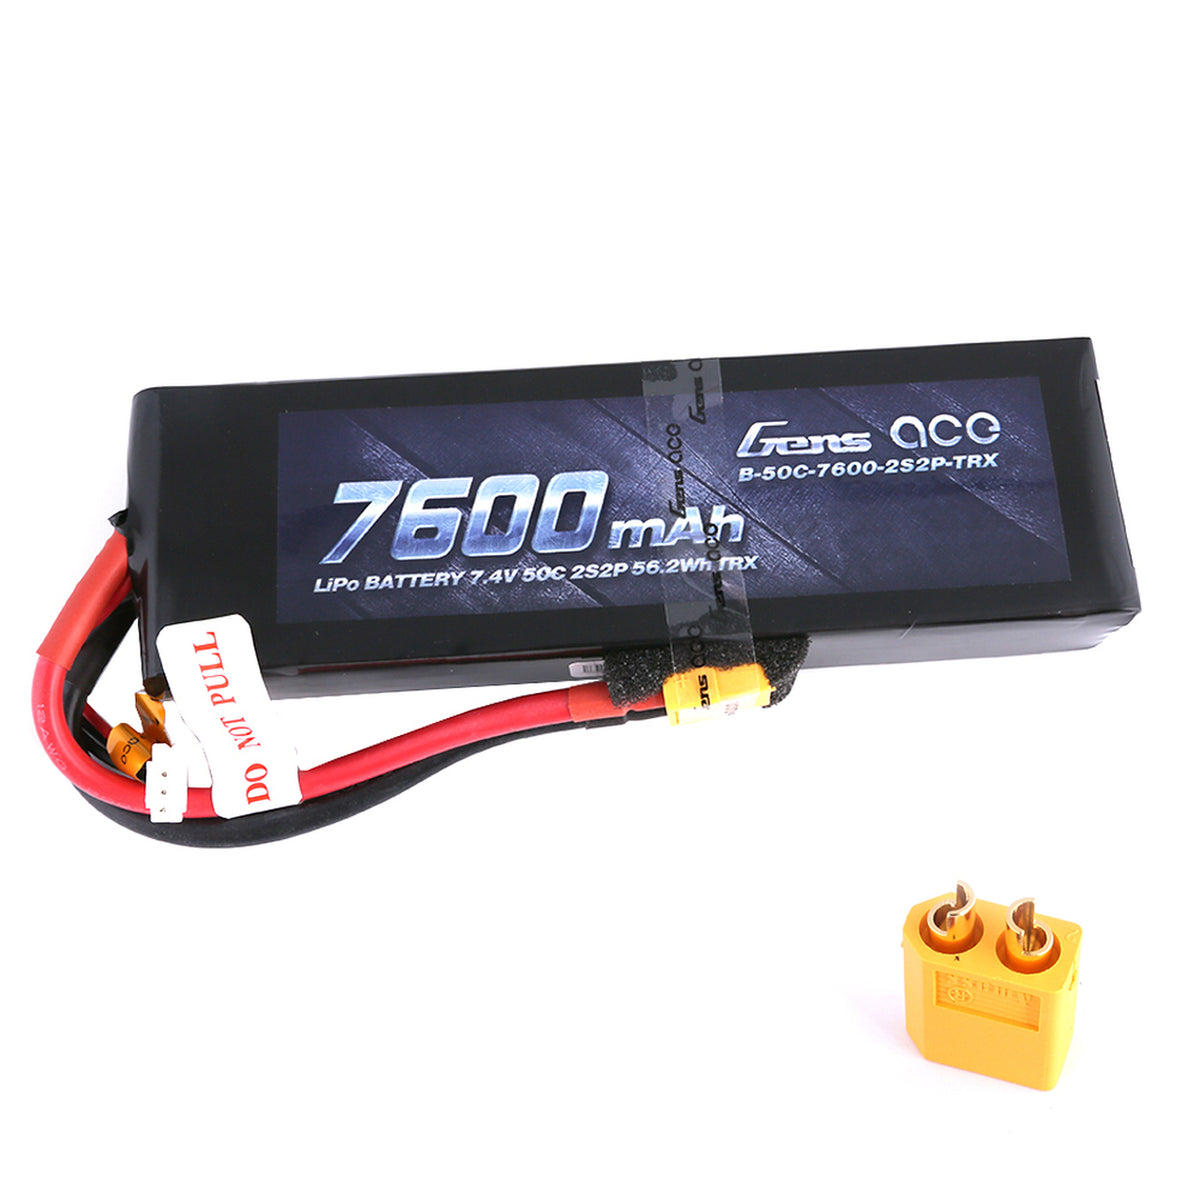 Gens Ace 7600mAh 7.4V 50C 2S2P Lipo Battery Pack with XT60 Plug (GEA76002S50X6)